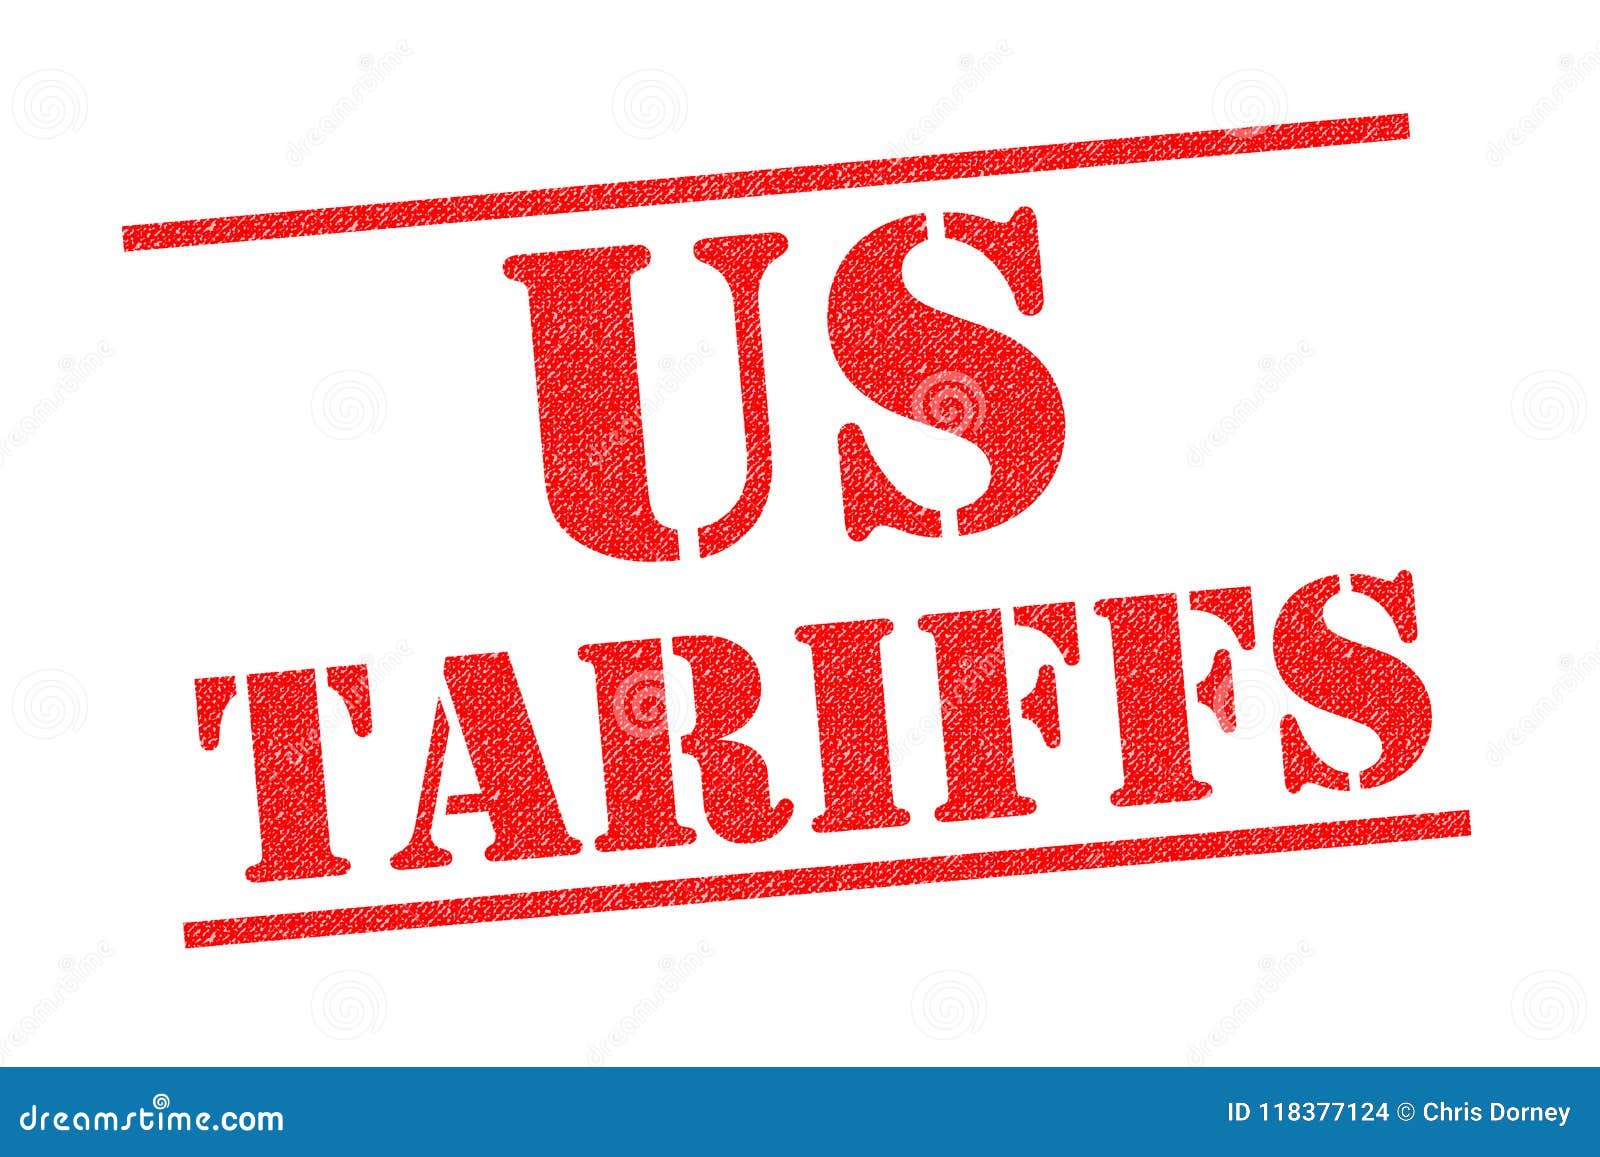 us tariffs rubber stamp